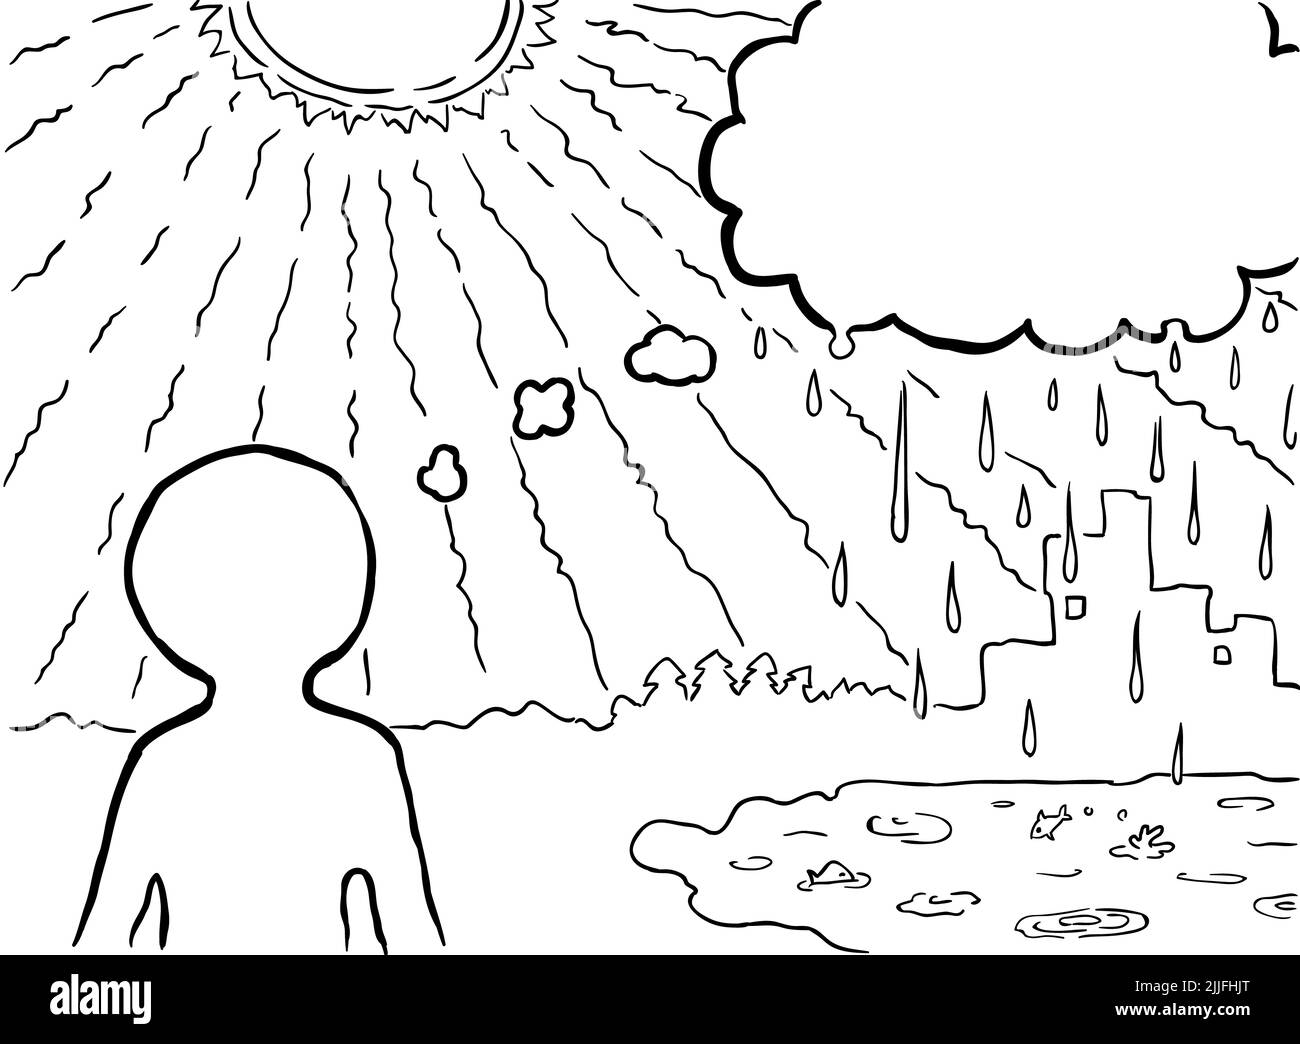 Rain thought bubble cloud metaphor heat wave weather, ink drawing illustration, horizontal Stock Photo